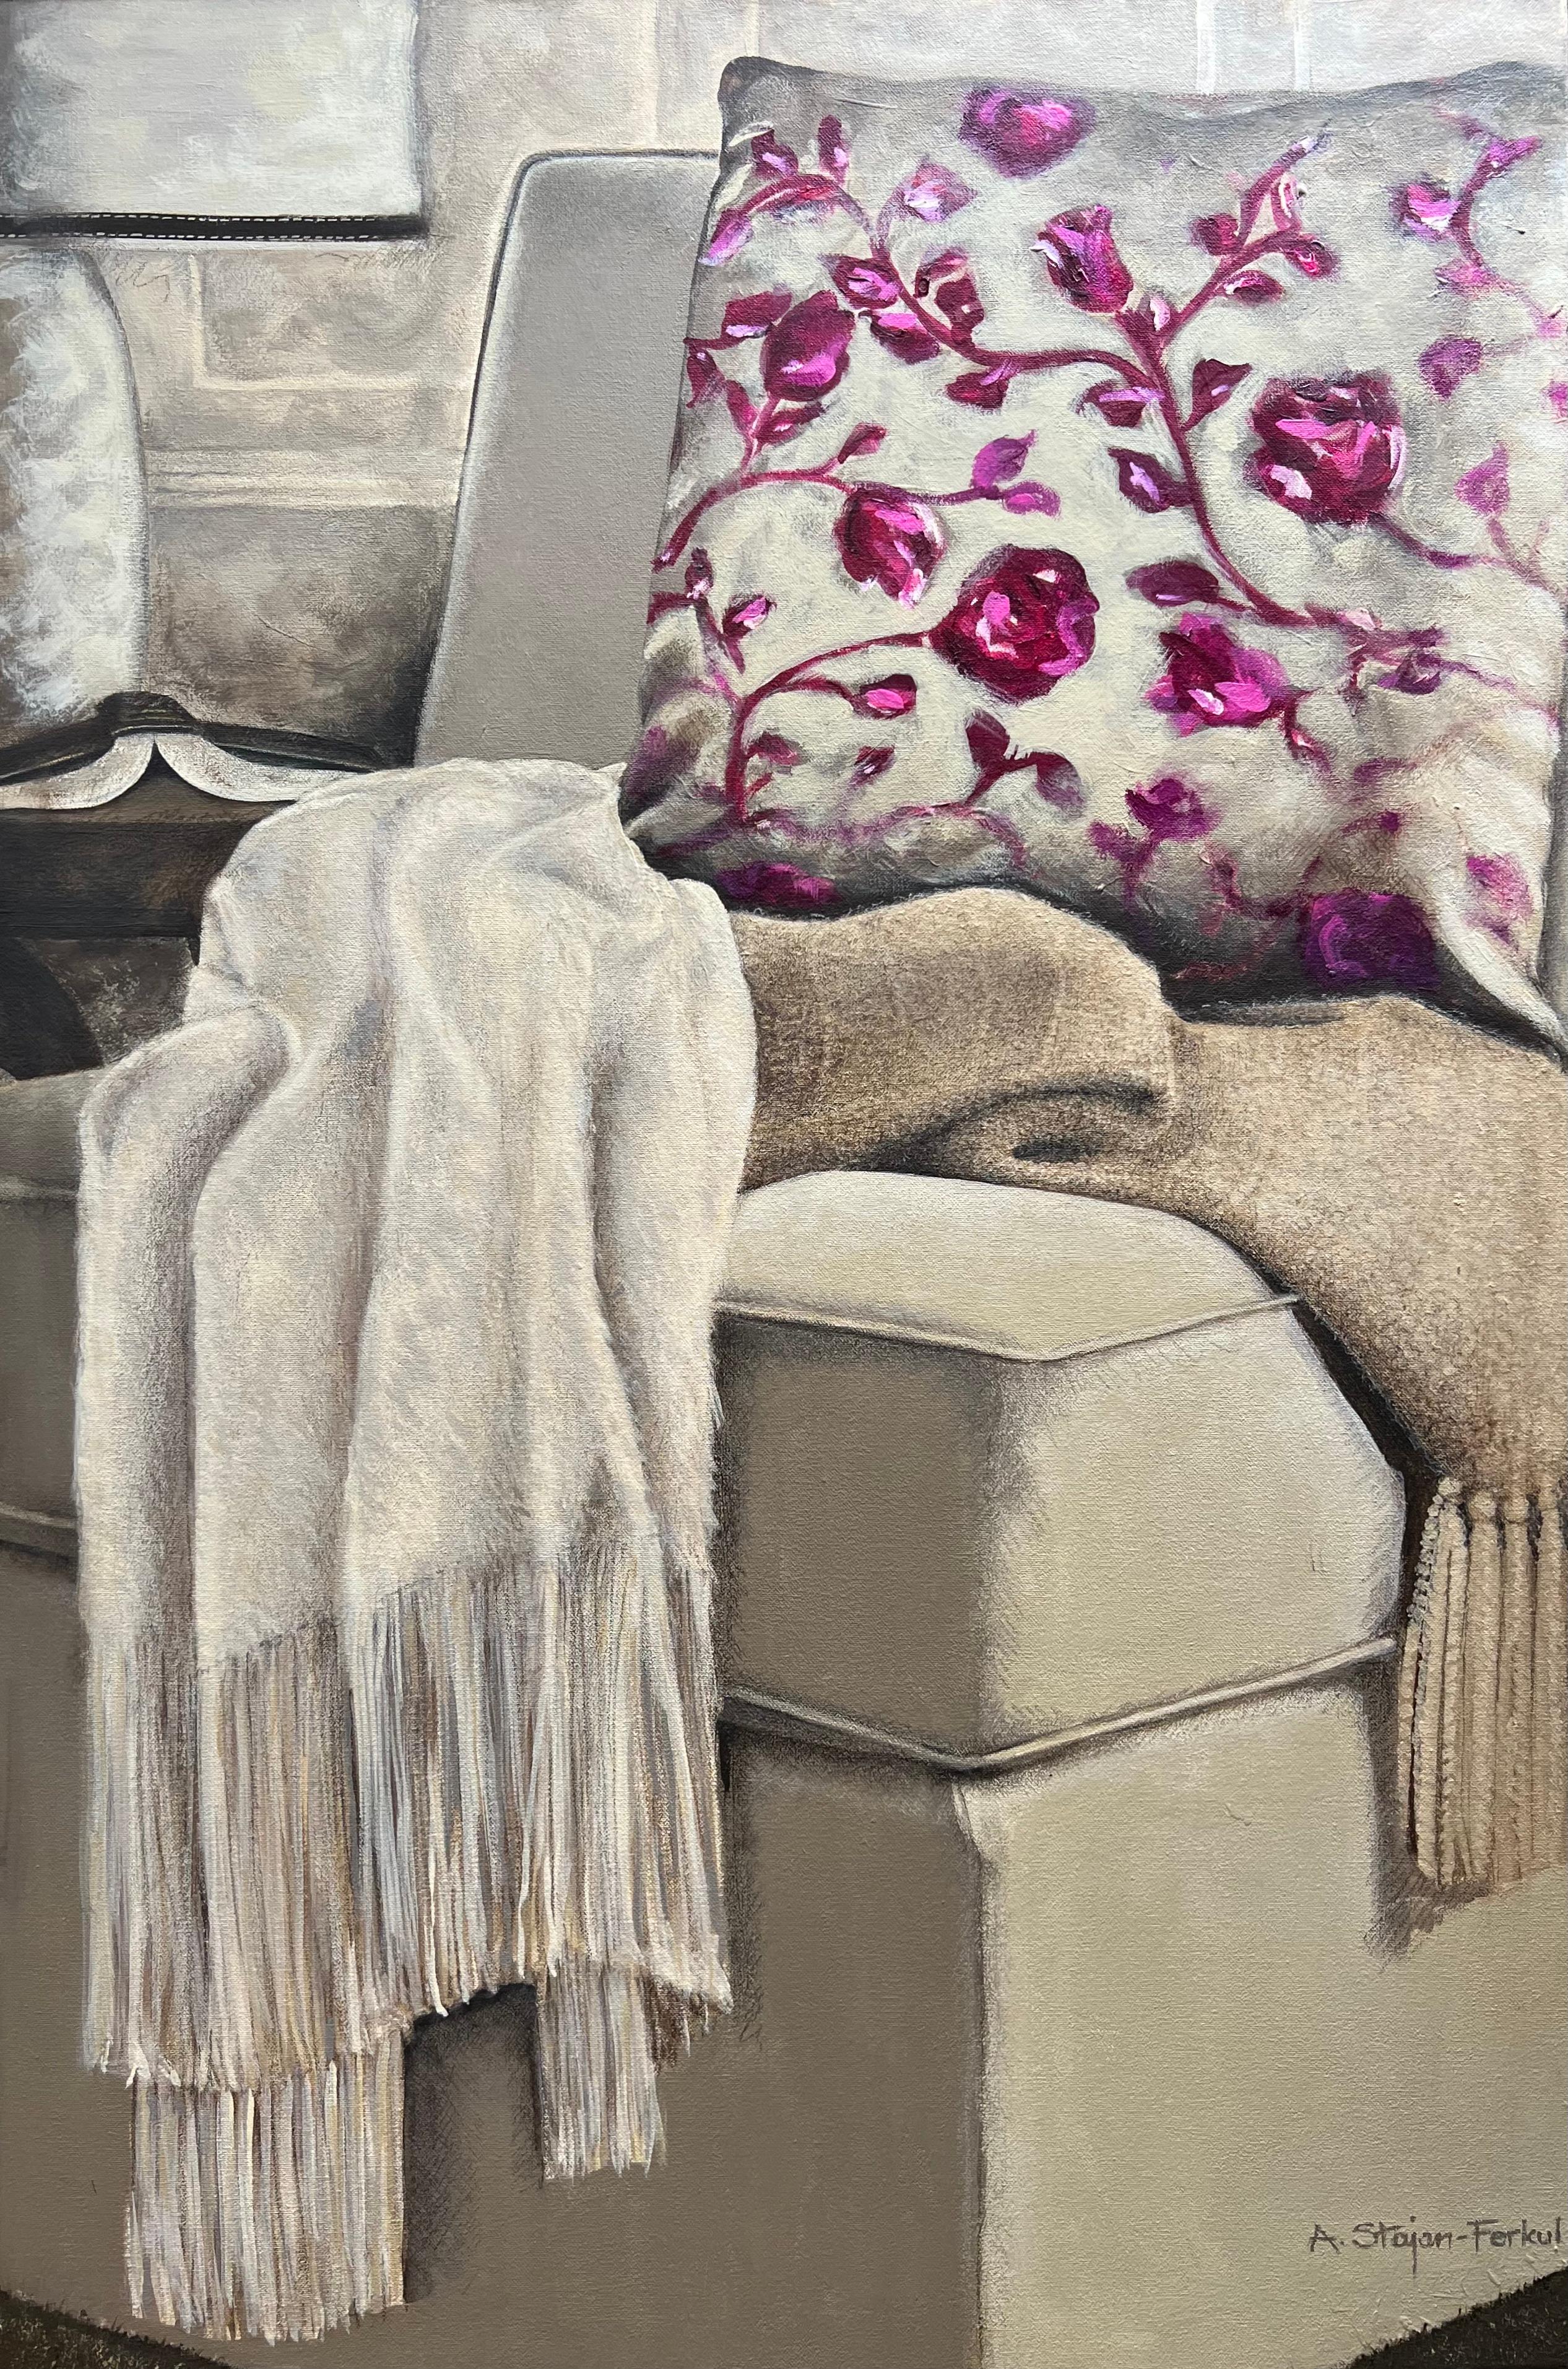 Andrea Stajan-Ferkul Interior Painting – Quiet Time - 24 Zoll x 36 Zoll, Interieur-Stilllebengemälde, Rosa, Beige, Kissen, Stuhl